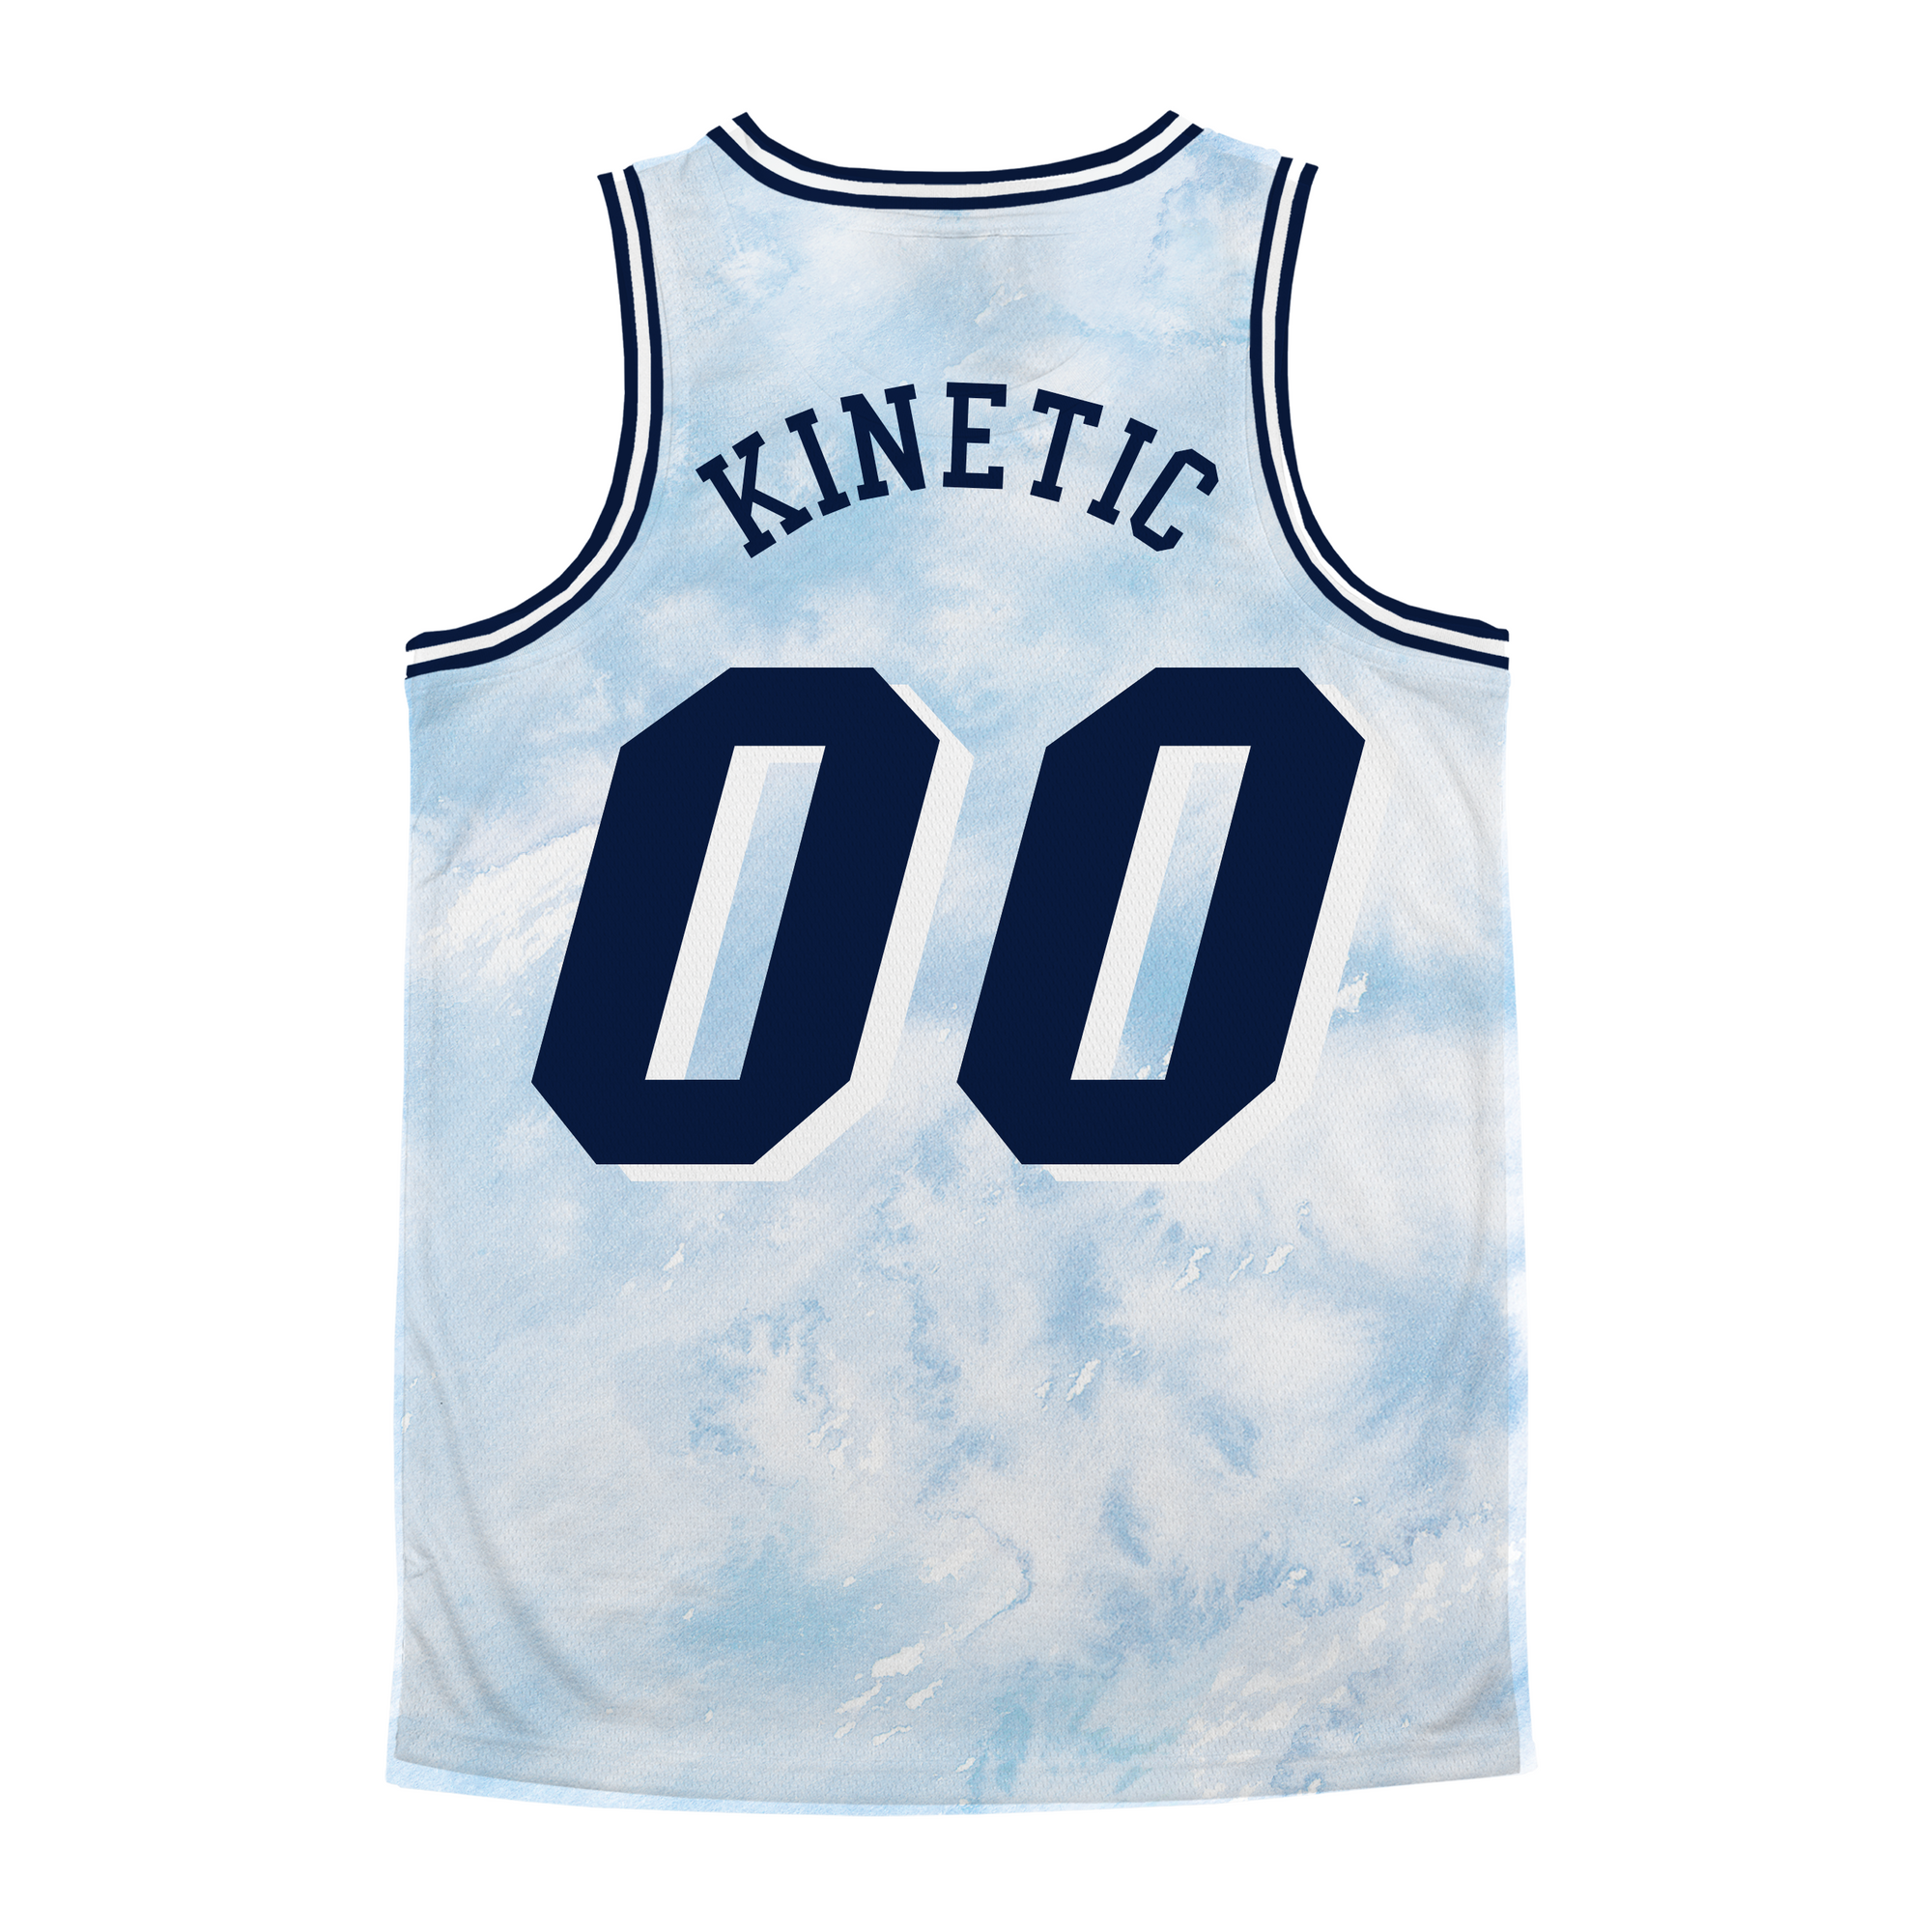 Theta Xi - Blue Sky Basketball Jersey